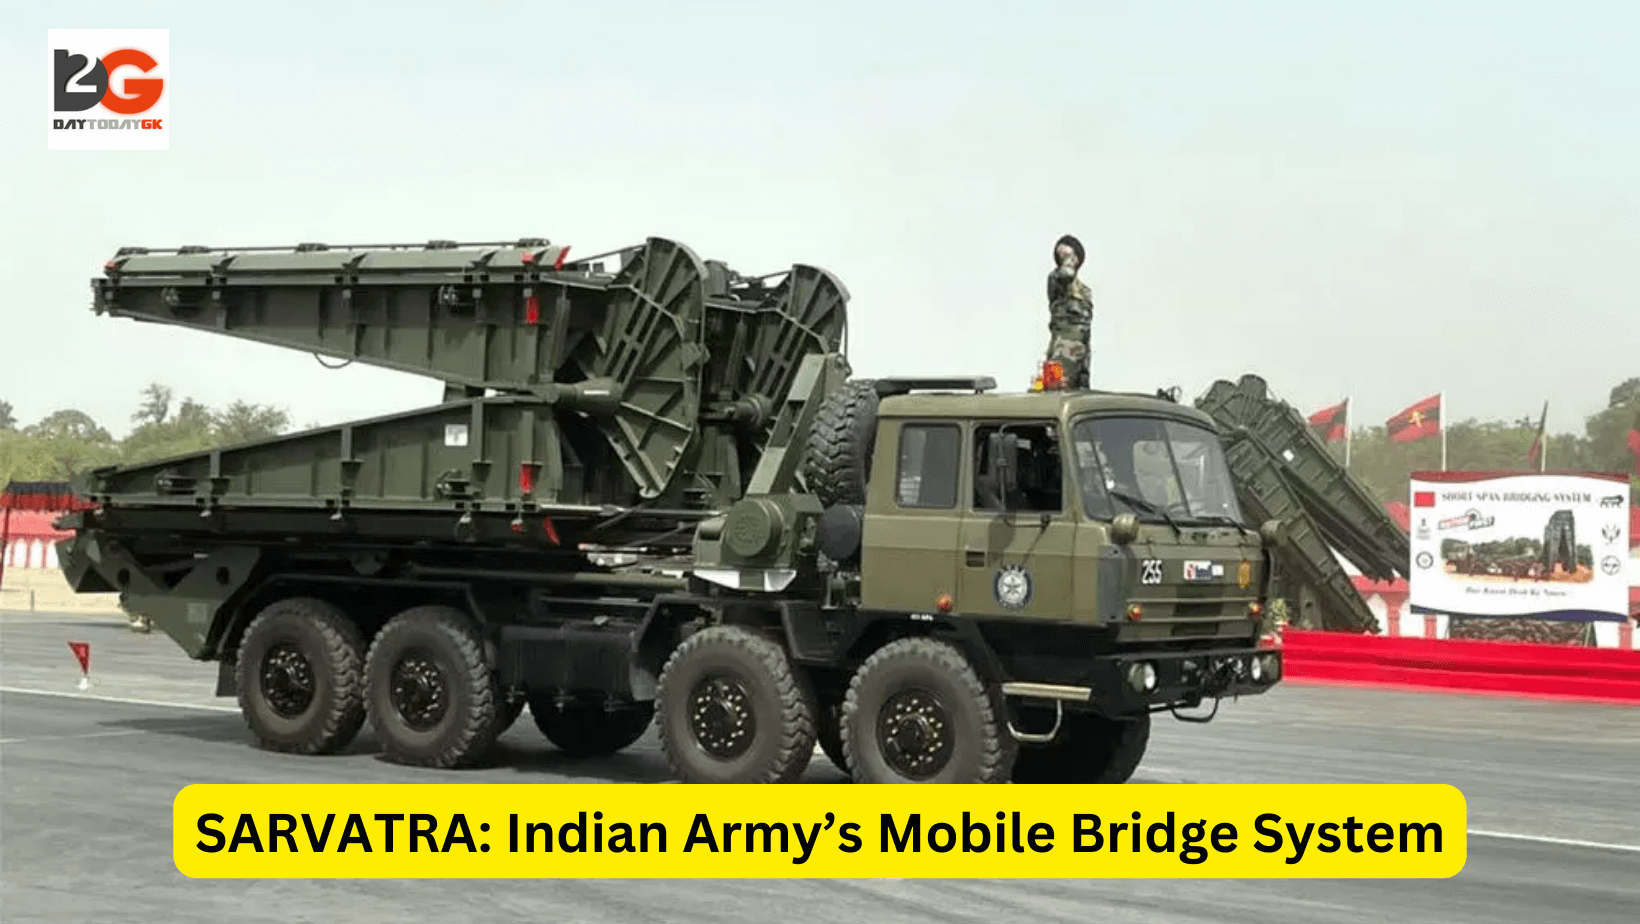 SARVATRA: Indian Army’s Mobile Bridge System